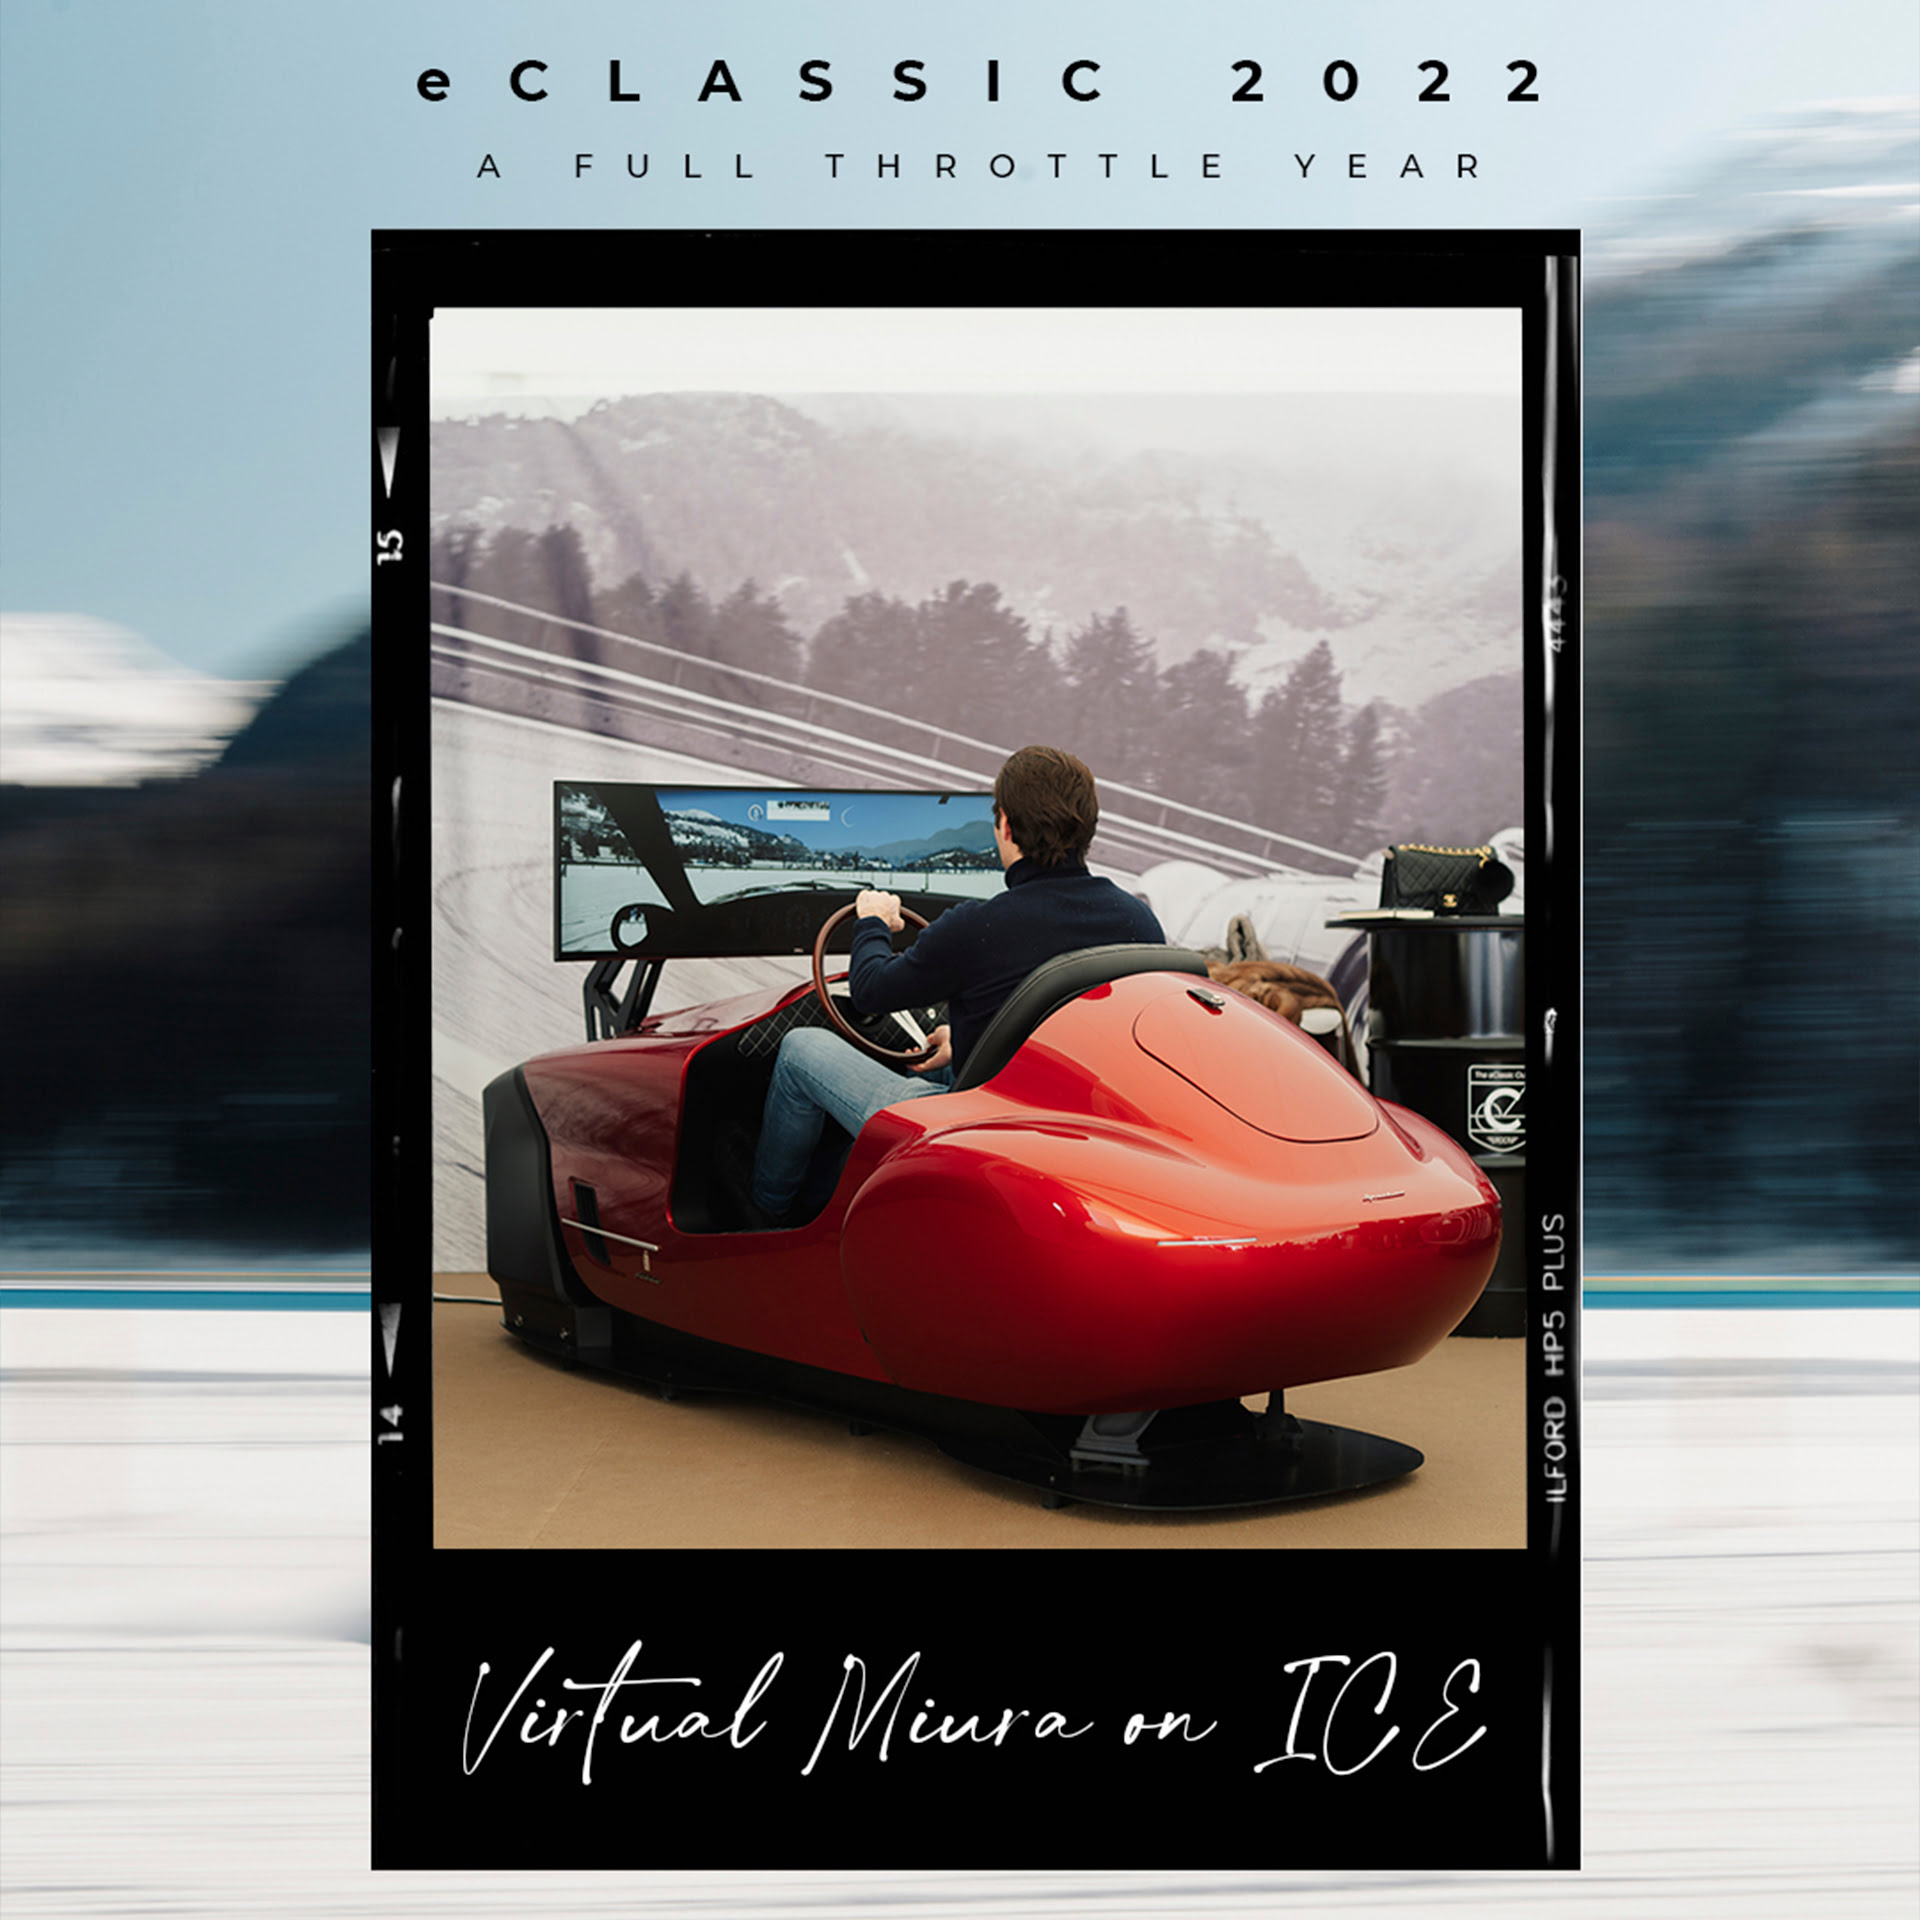 eClassic 2022: a full throttle year Virtual Miura on ICE image